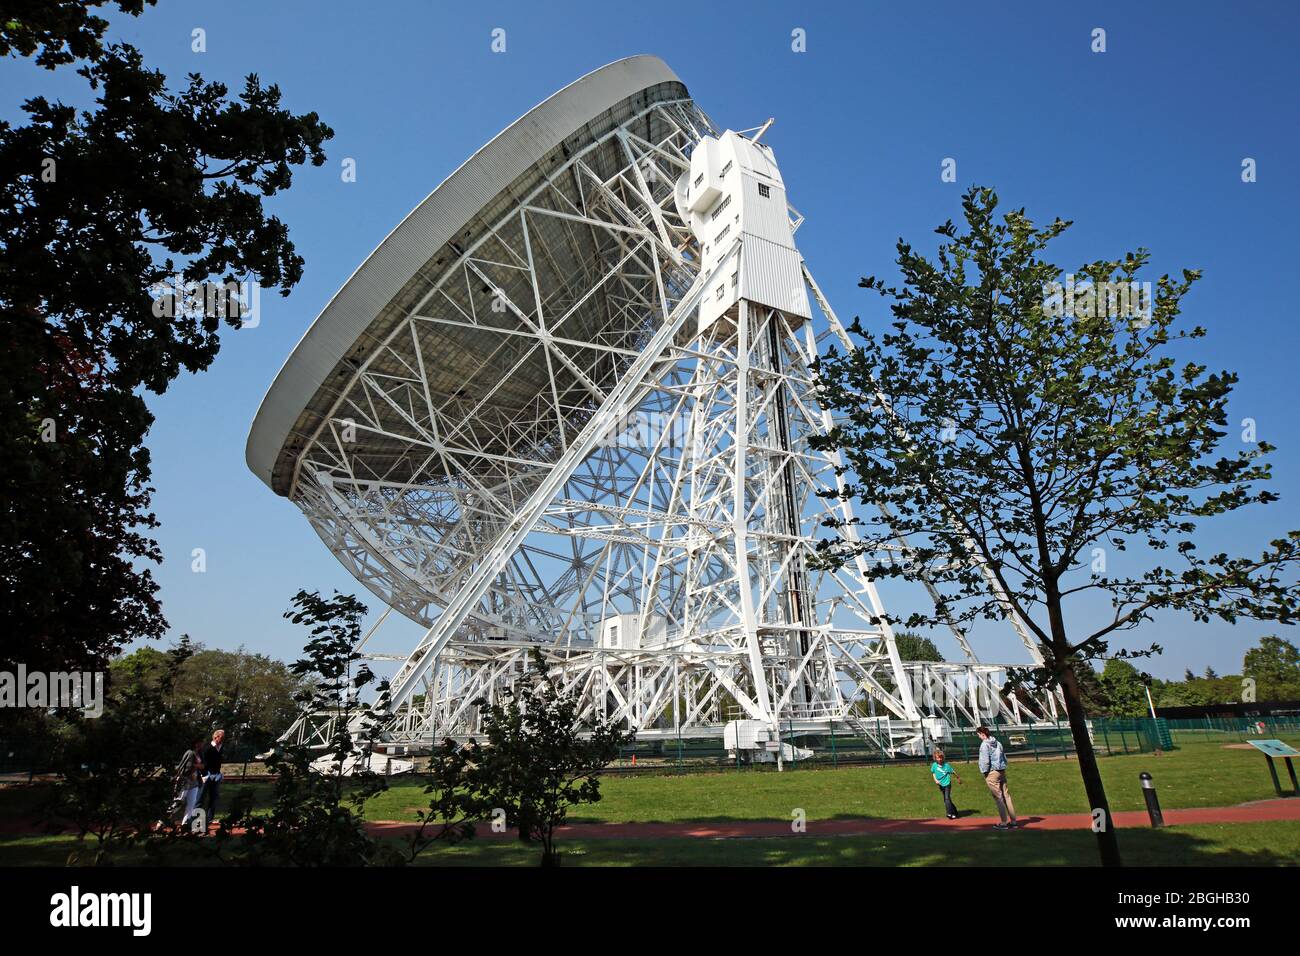 Jodrell Bank Radioteleskop, Jodrell Bank Observatory, Holmes Chapel, The University of Manchester, Macclesfield, Cheshire, England, UK, Sk11 9DL Stockfoto